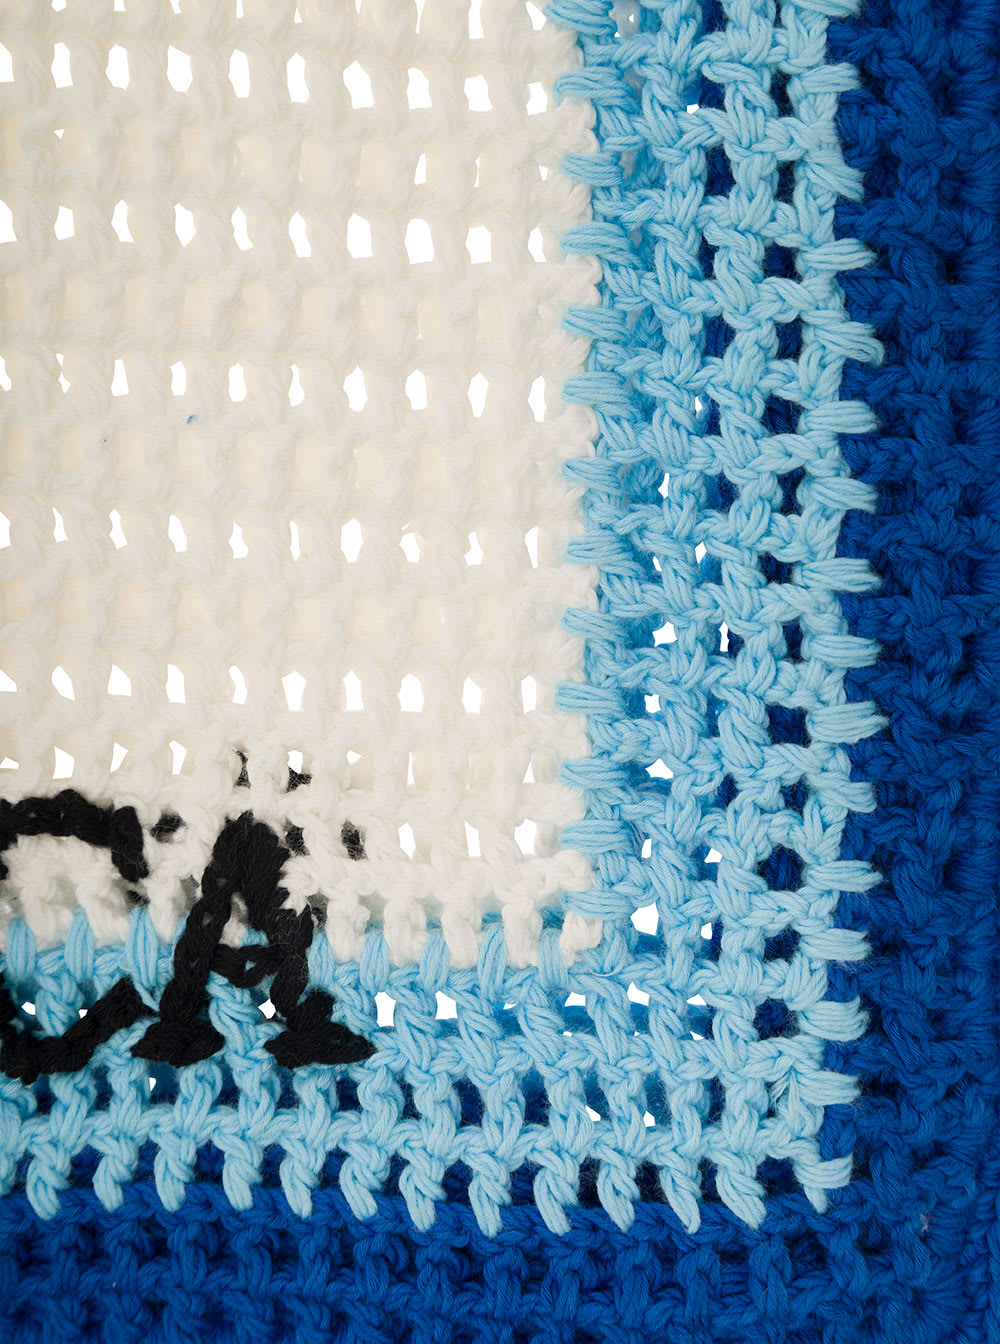 Casablanca Atlantis Crochet-knit Tote Bag - Blue